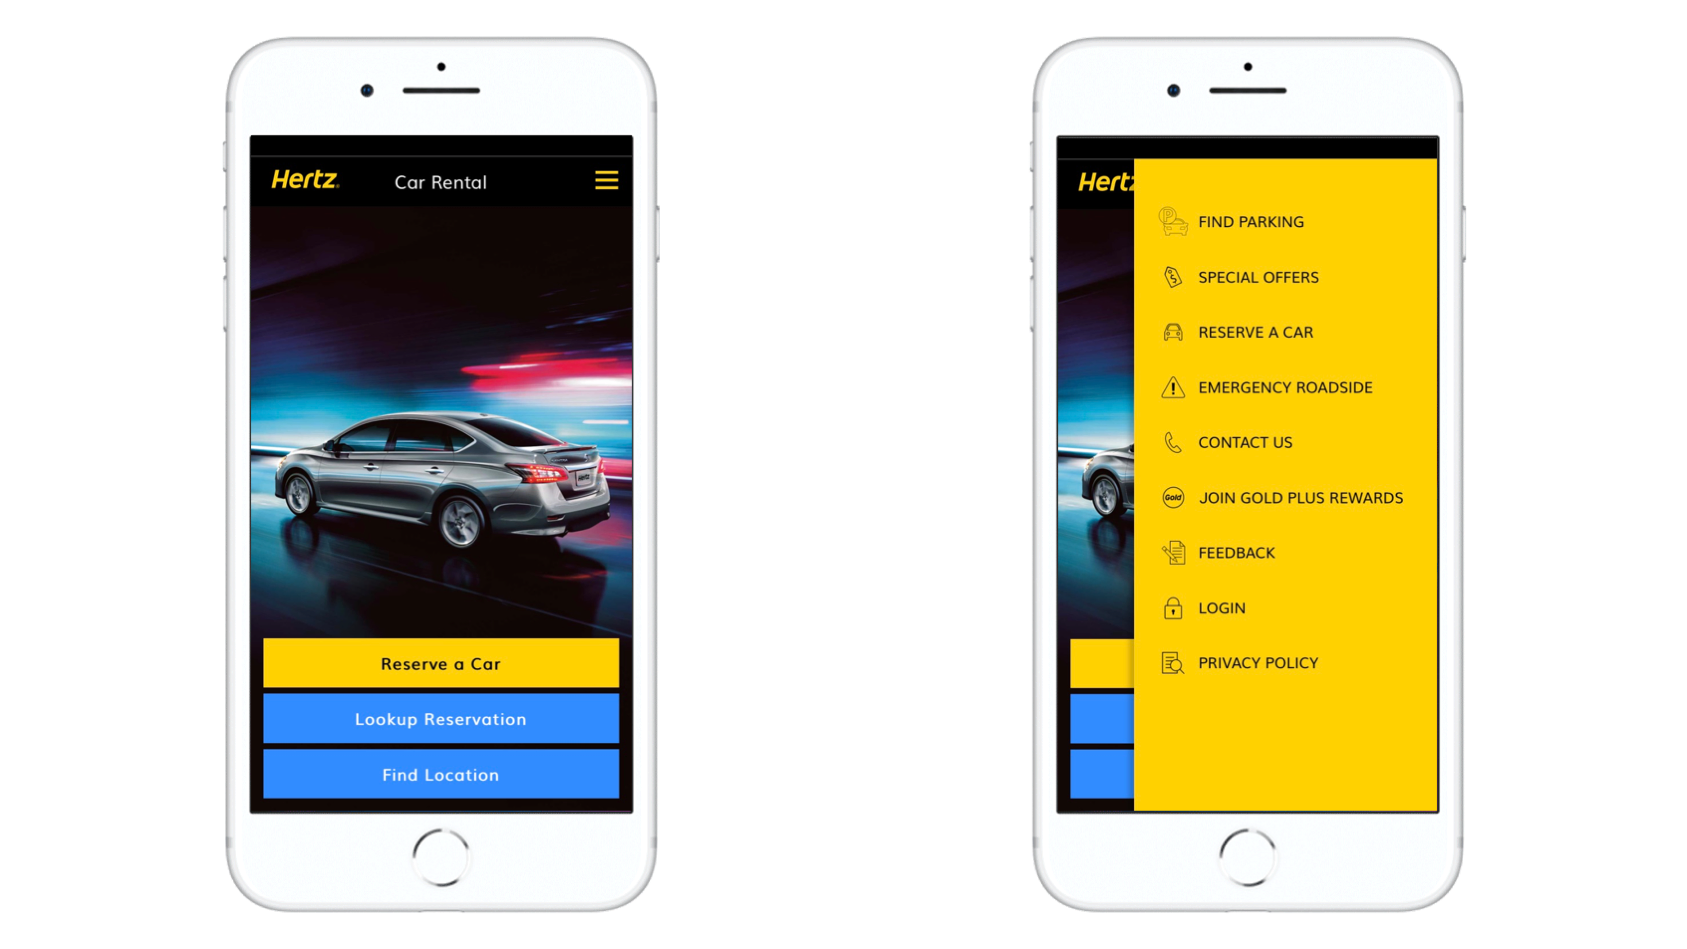 Hertz car rental mobile application home page screenshot